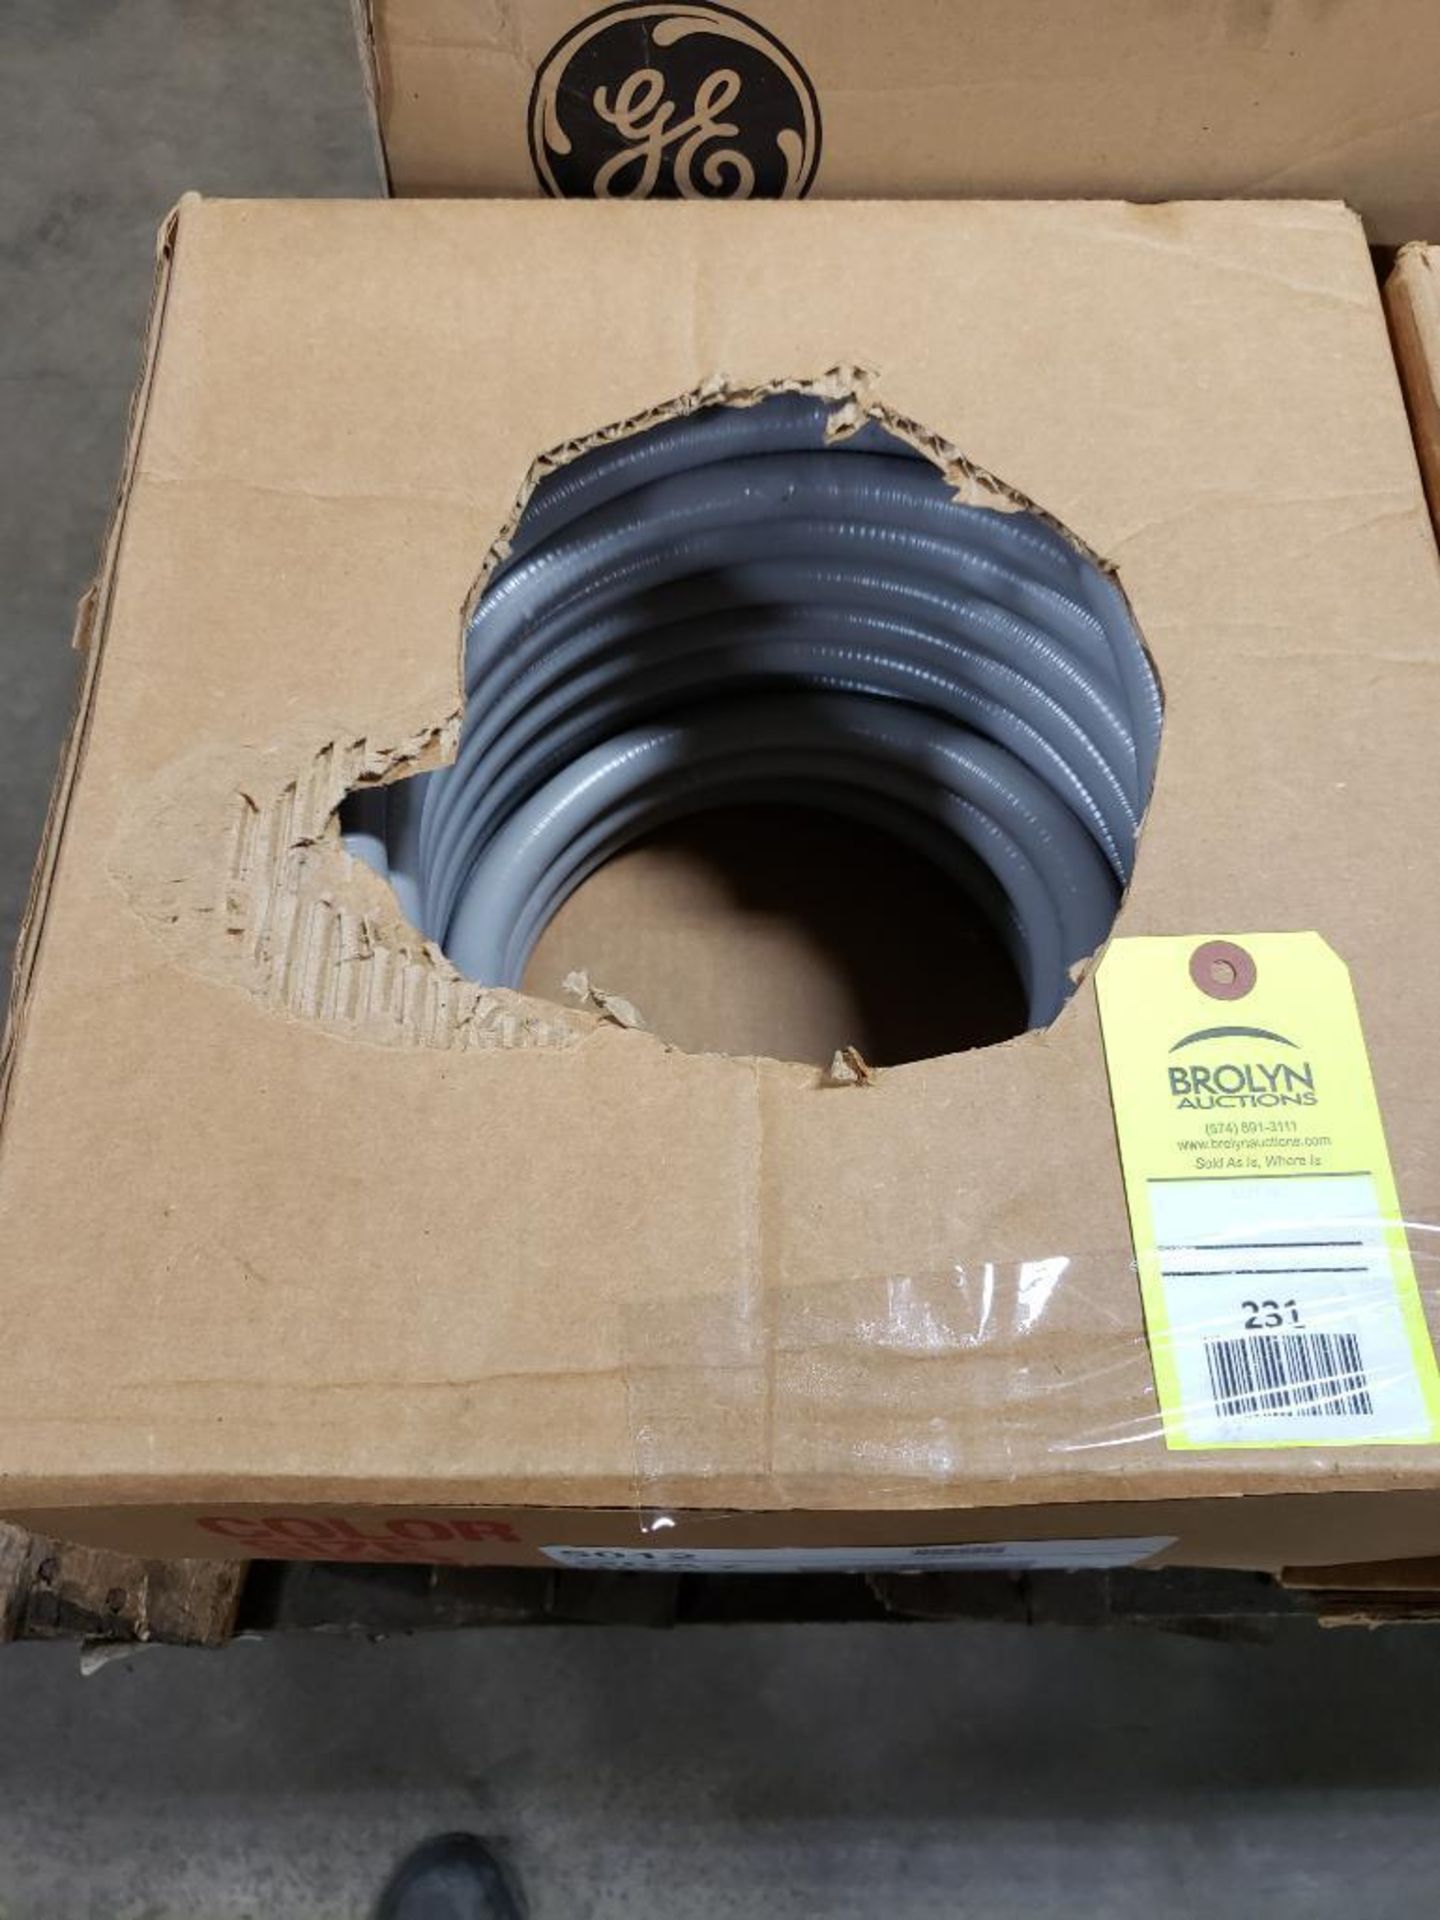 The International Metal Hose Co. 5012 1/2", 100', UALT Gray conduit tube